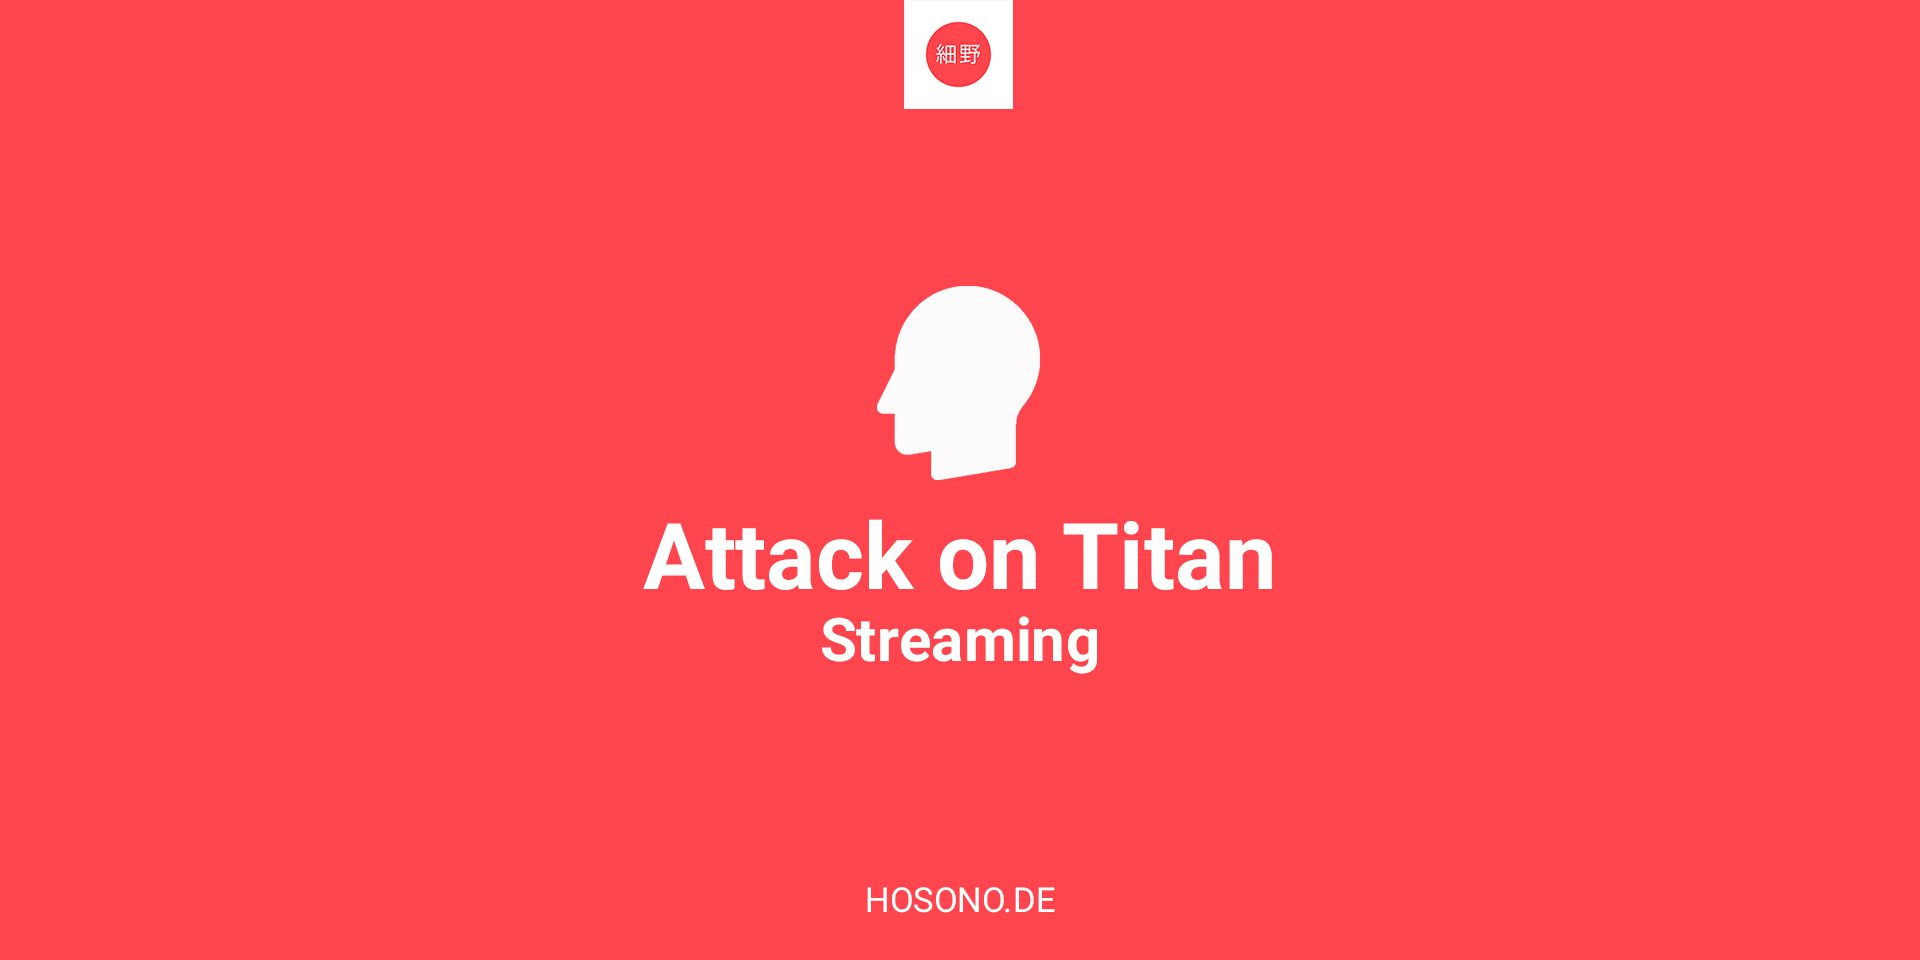 Attack on Titan auf BS (Burning Series)